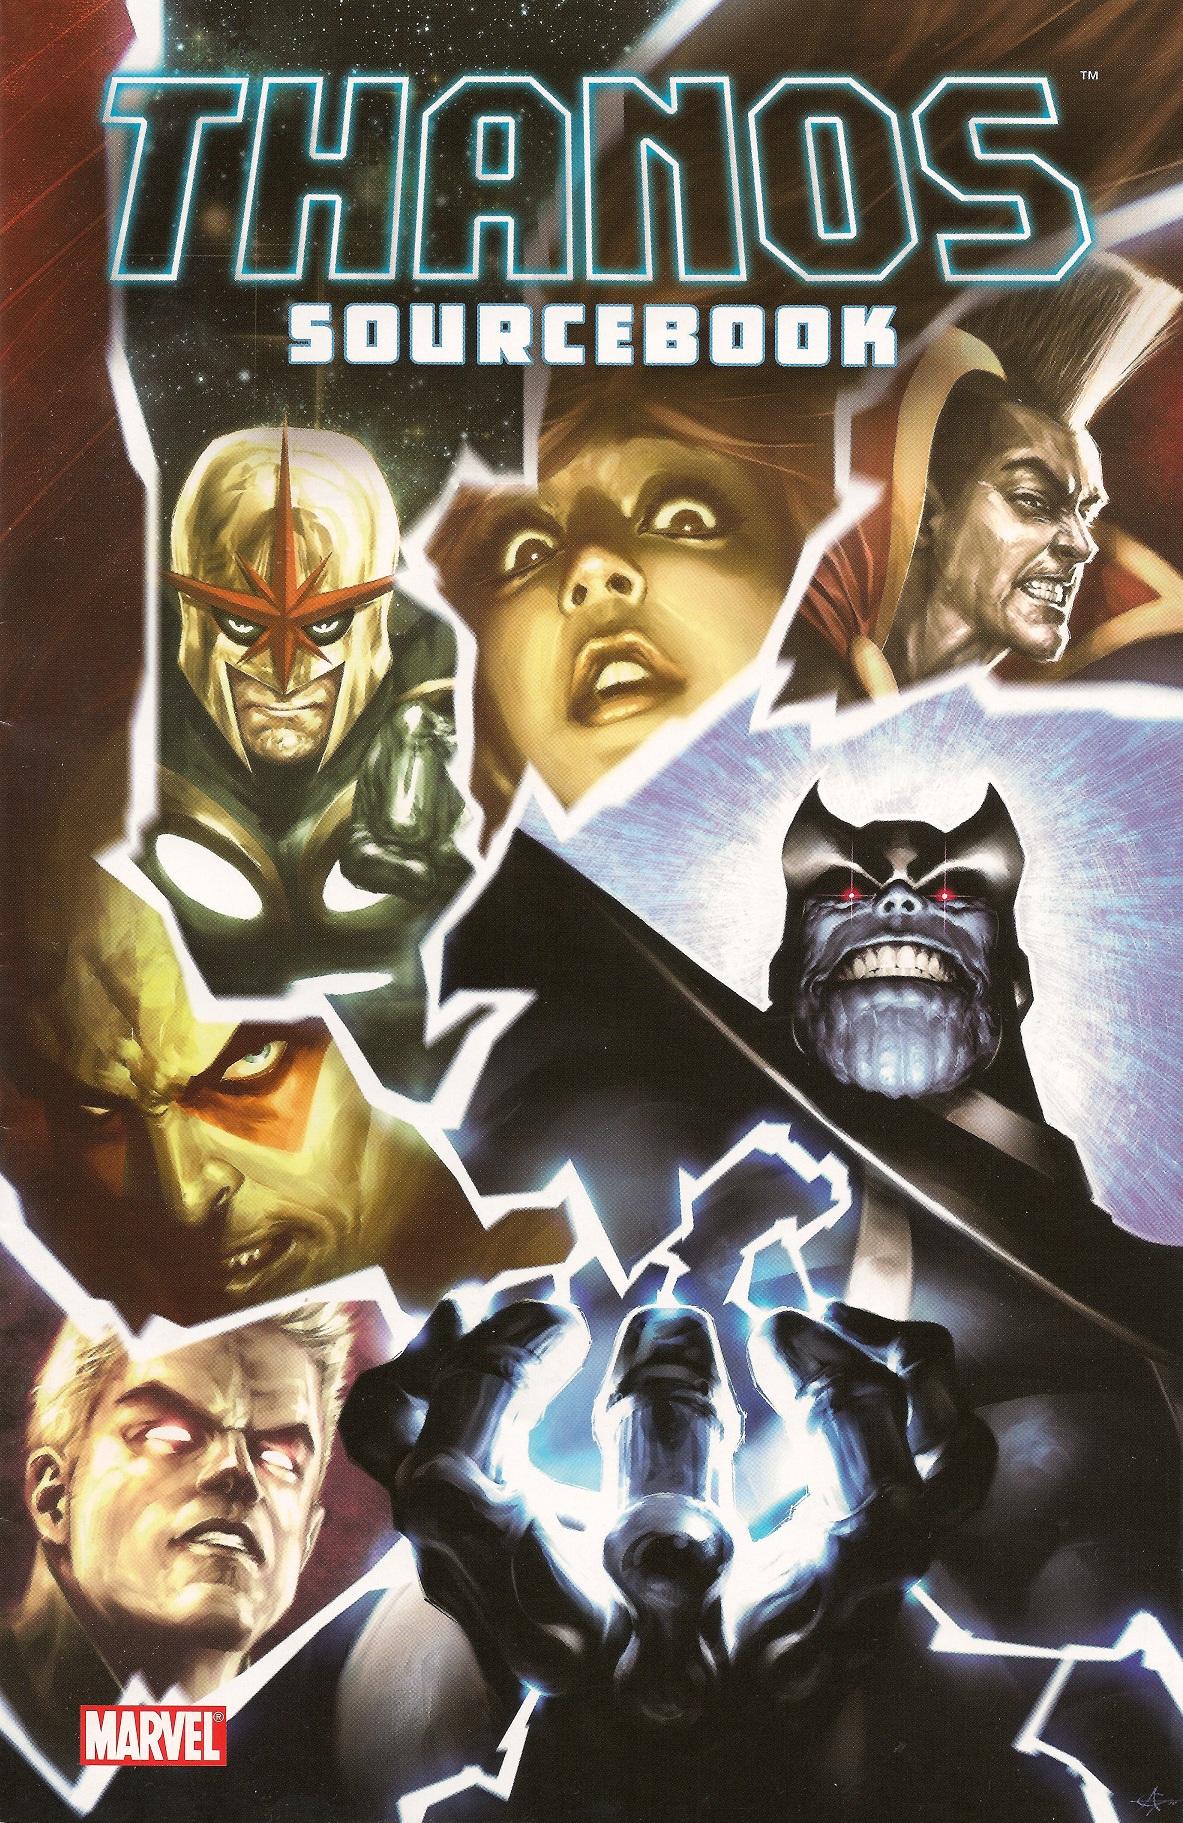 Thanos Sourcebook Vol. 1 #1